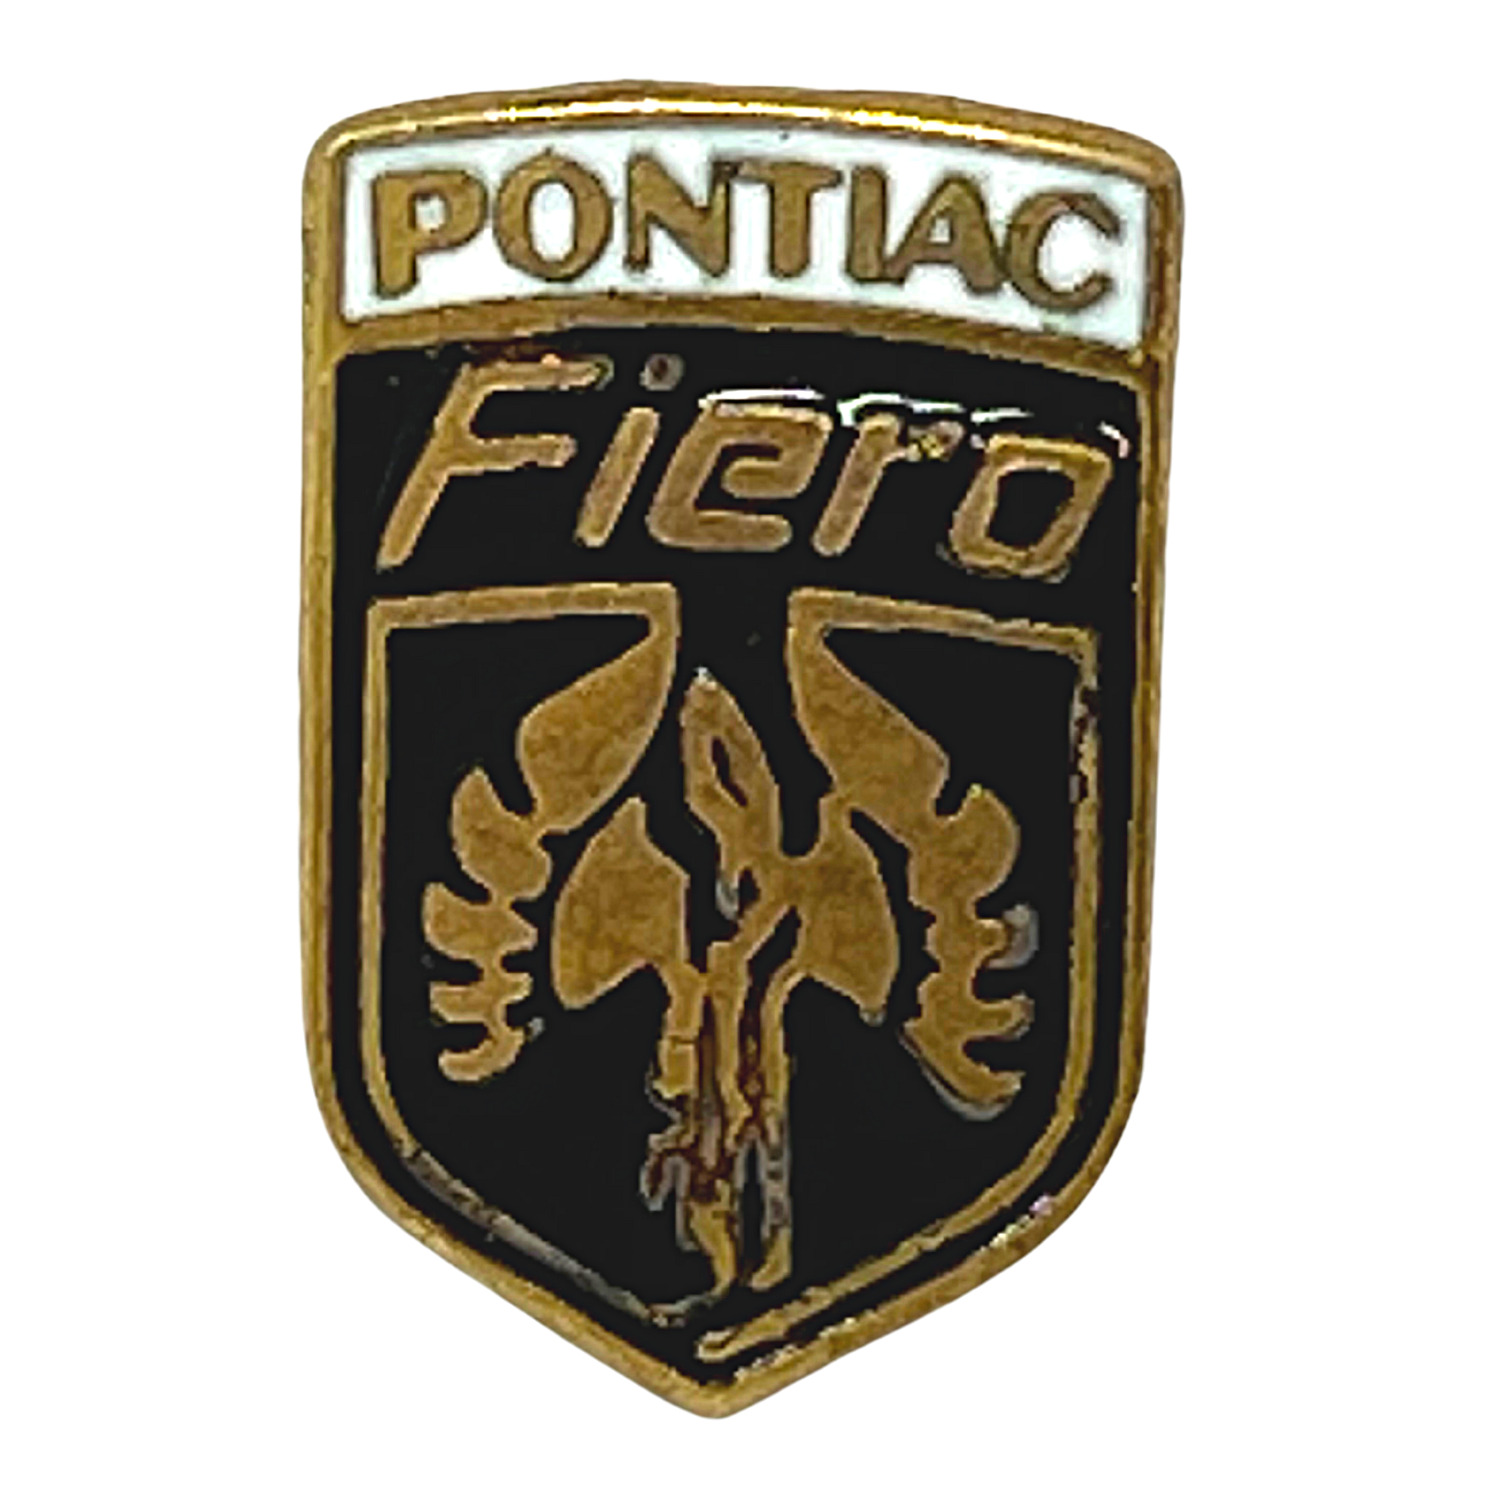 Pontiac Fiero Automotive Lapel Pin